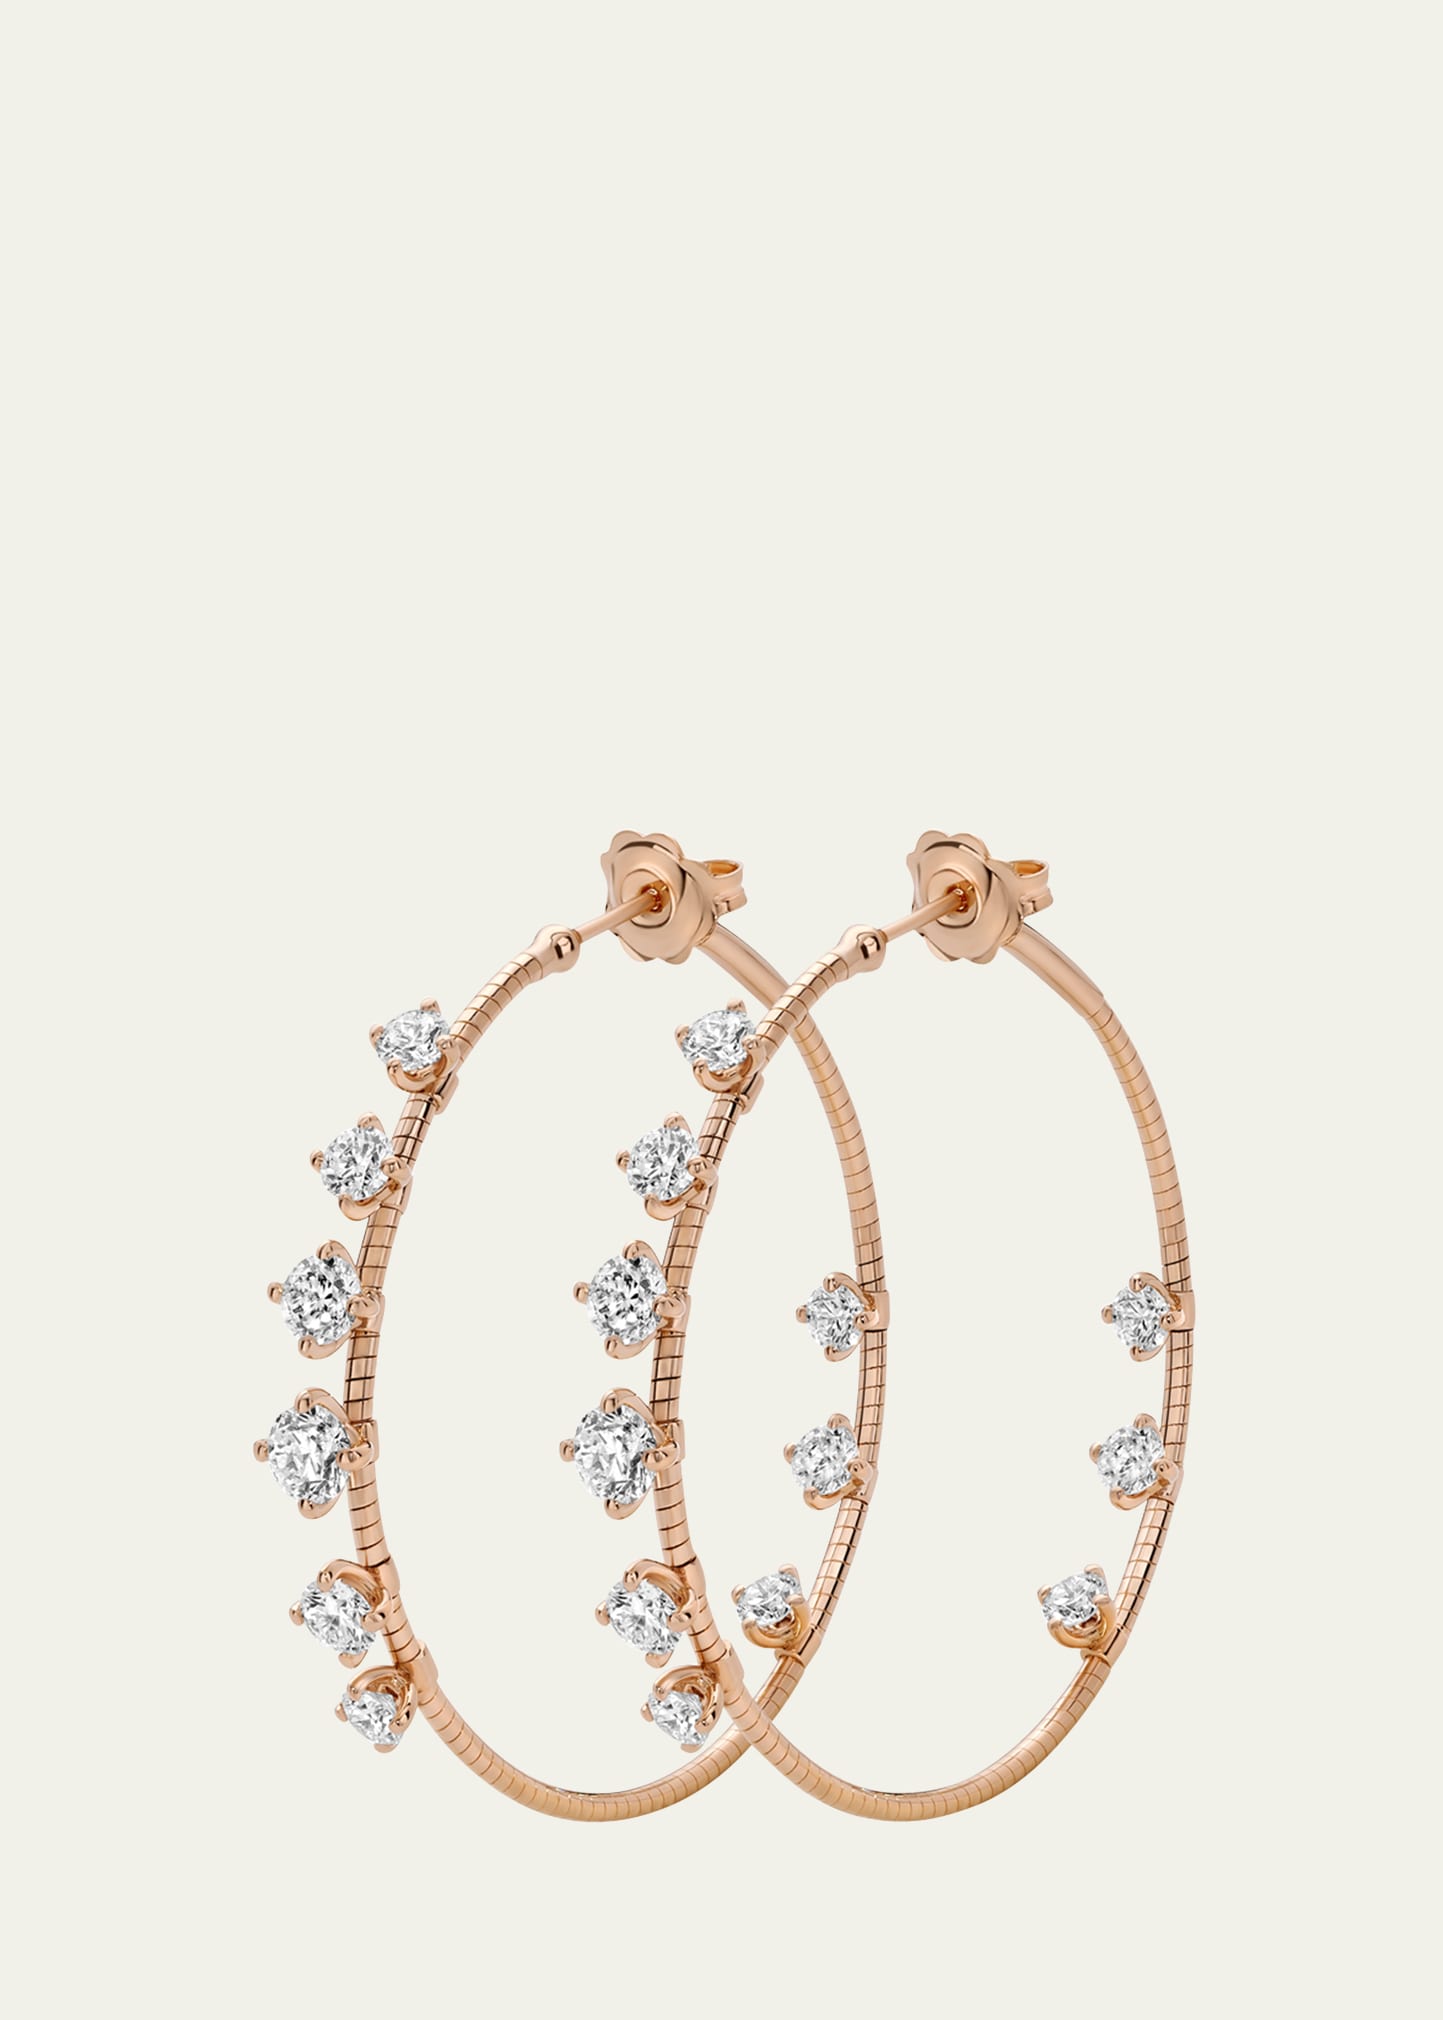 Mattia Cielo 18k Rose Gold Rugiada Earrings With Diamonds